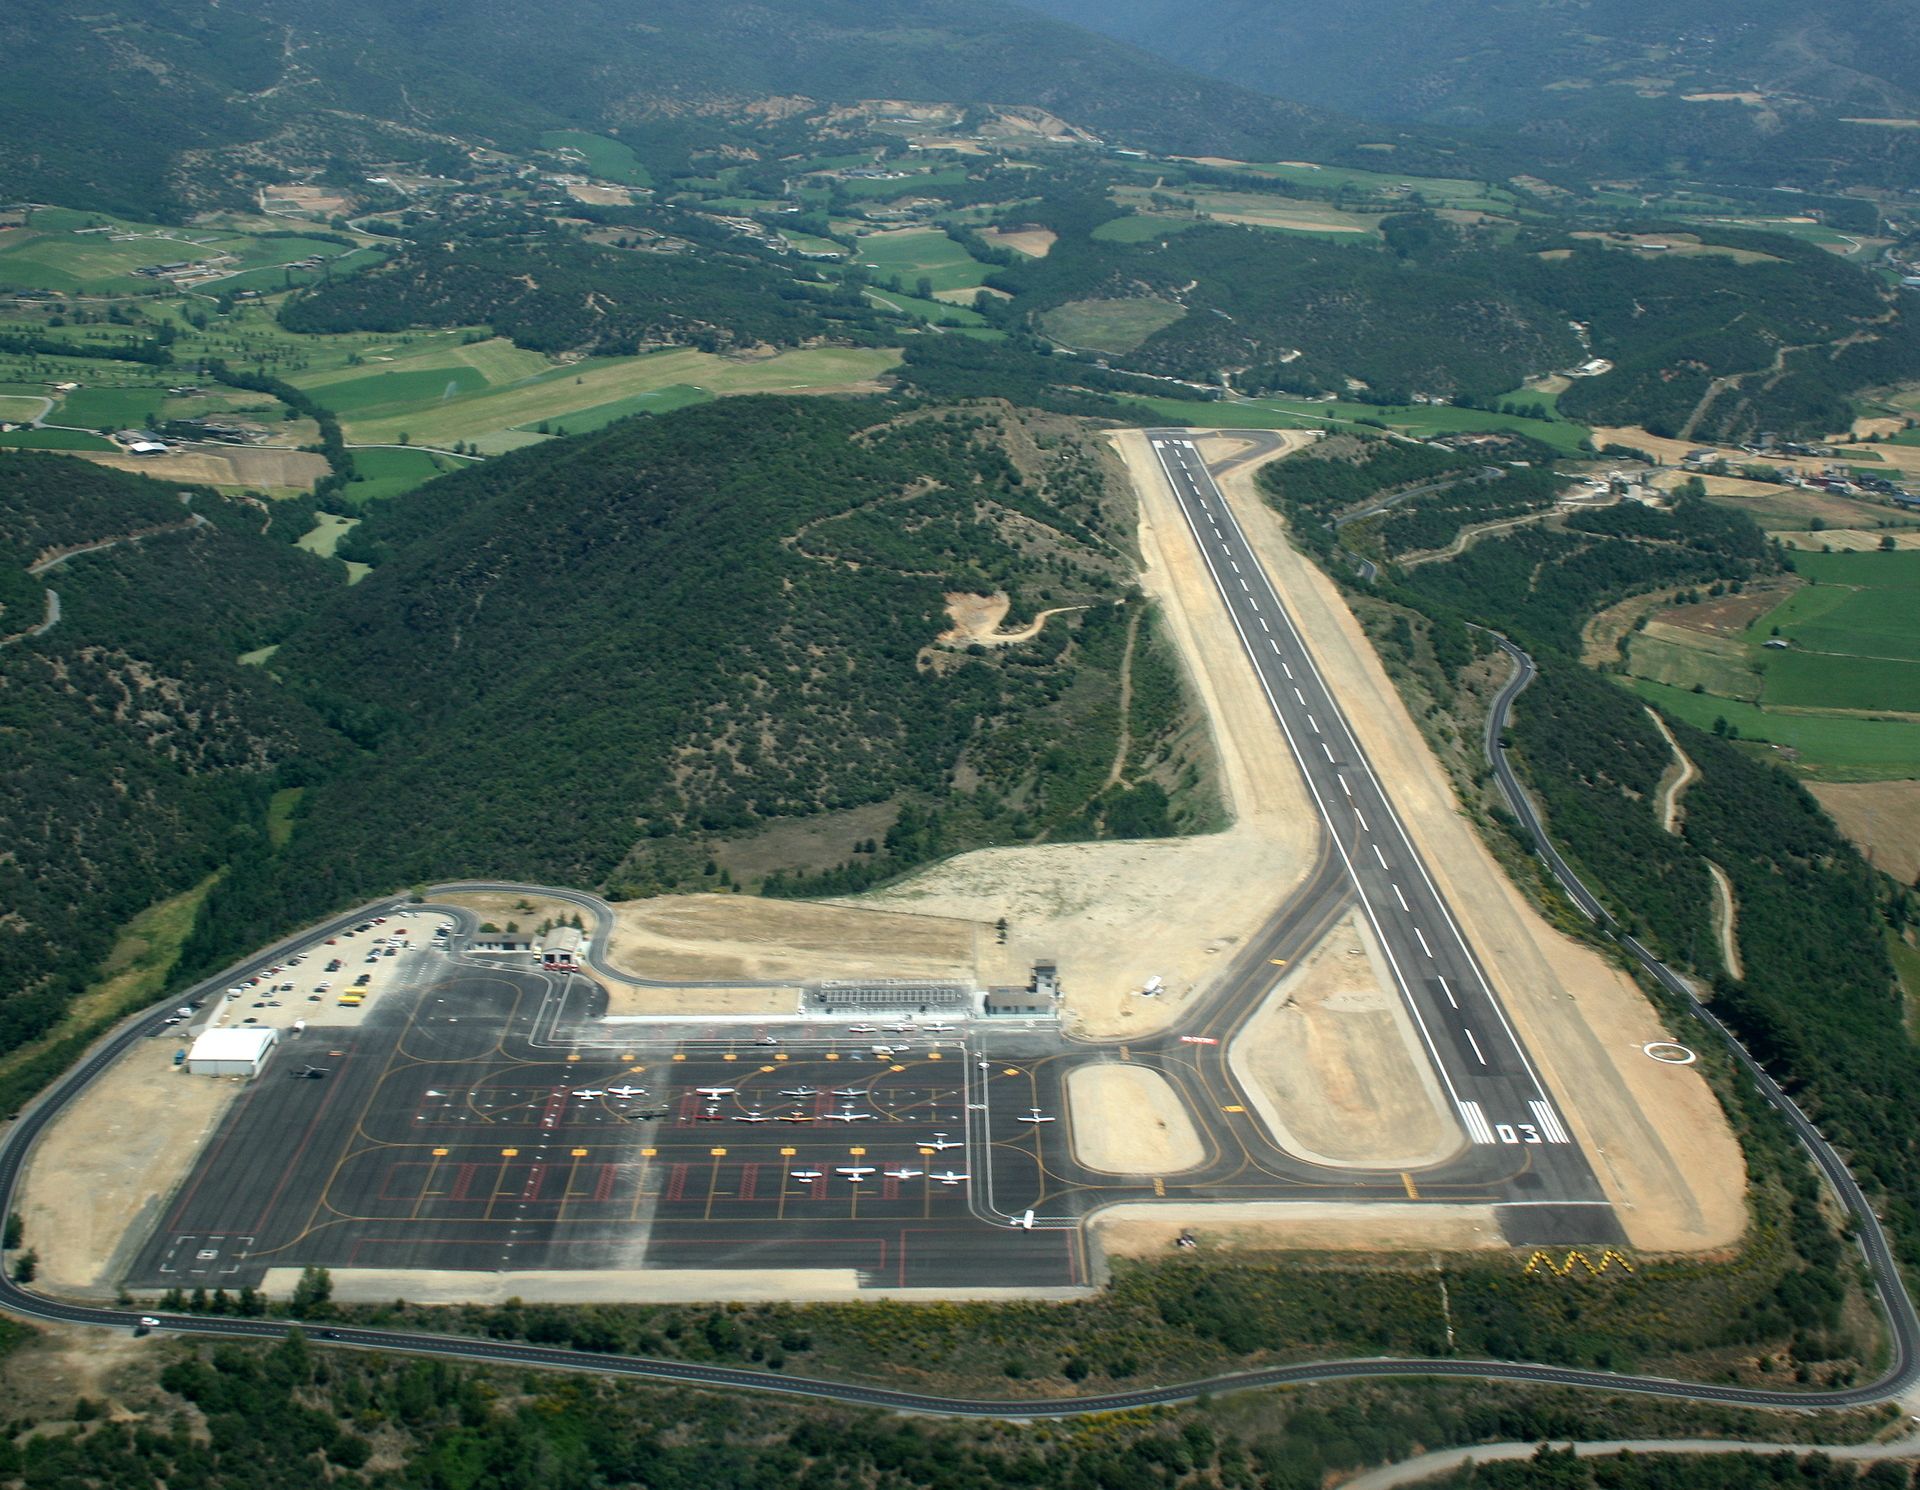 Aeropuerto de la Seu d'Urgell vista desde el aire